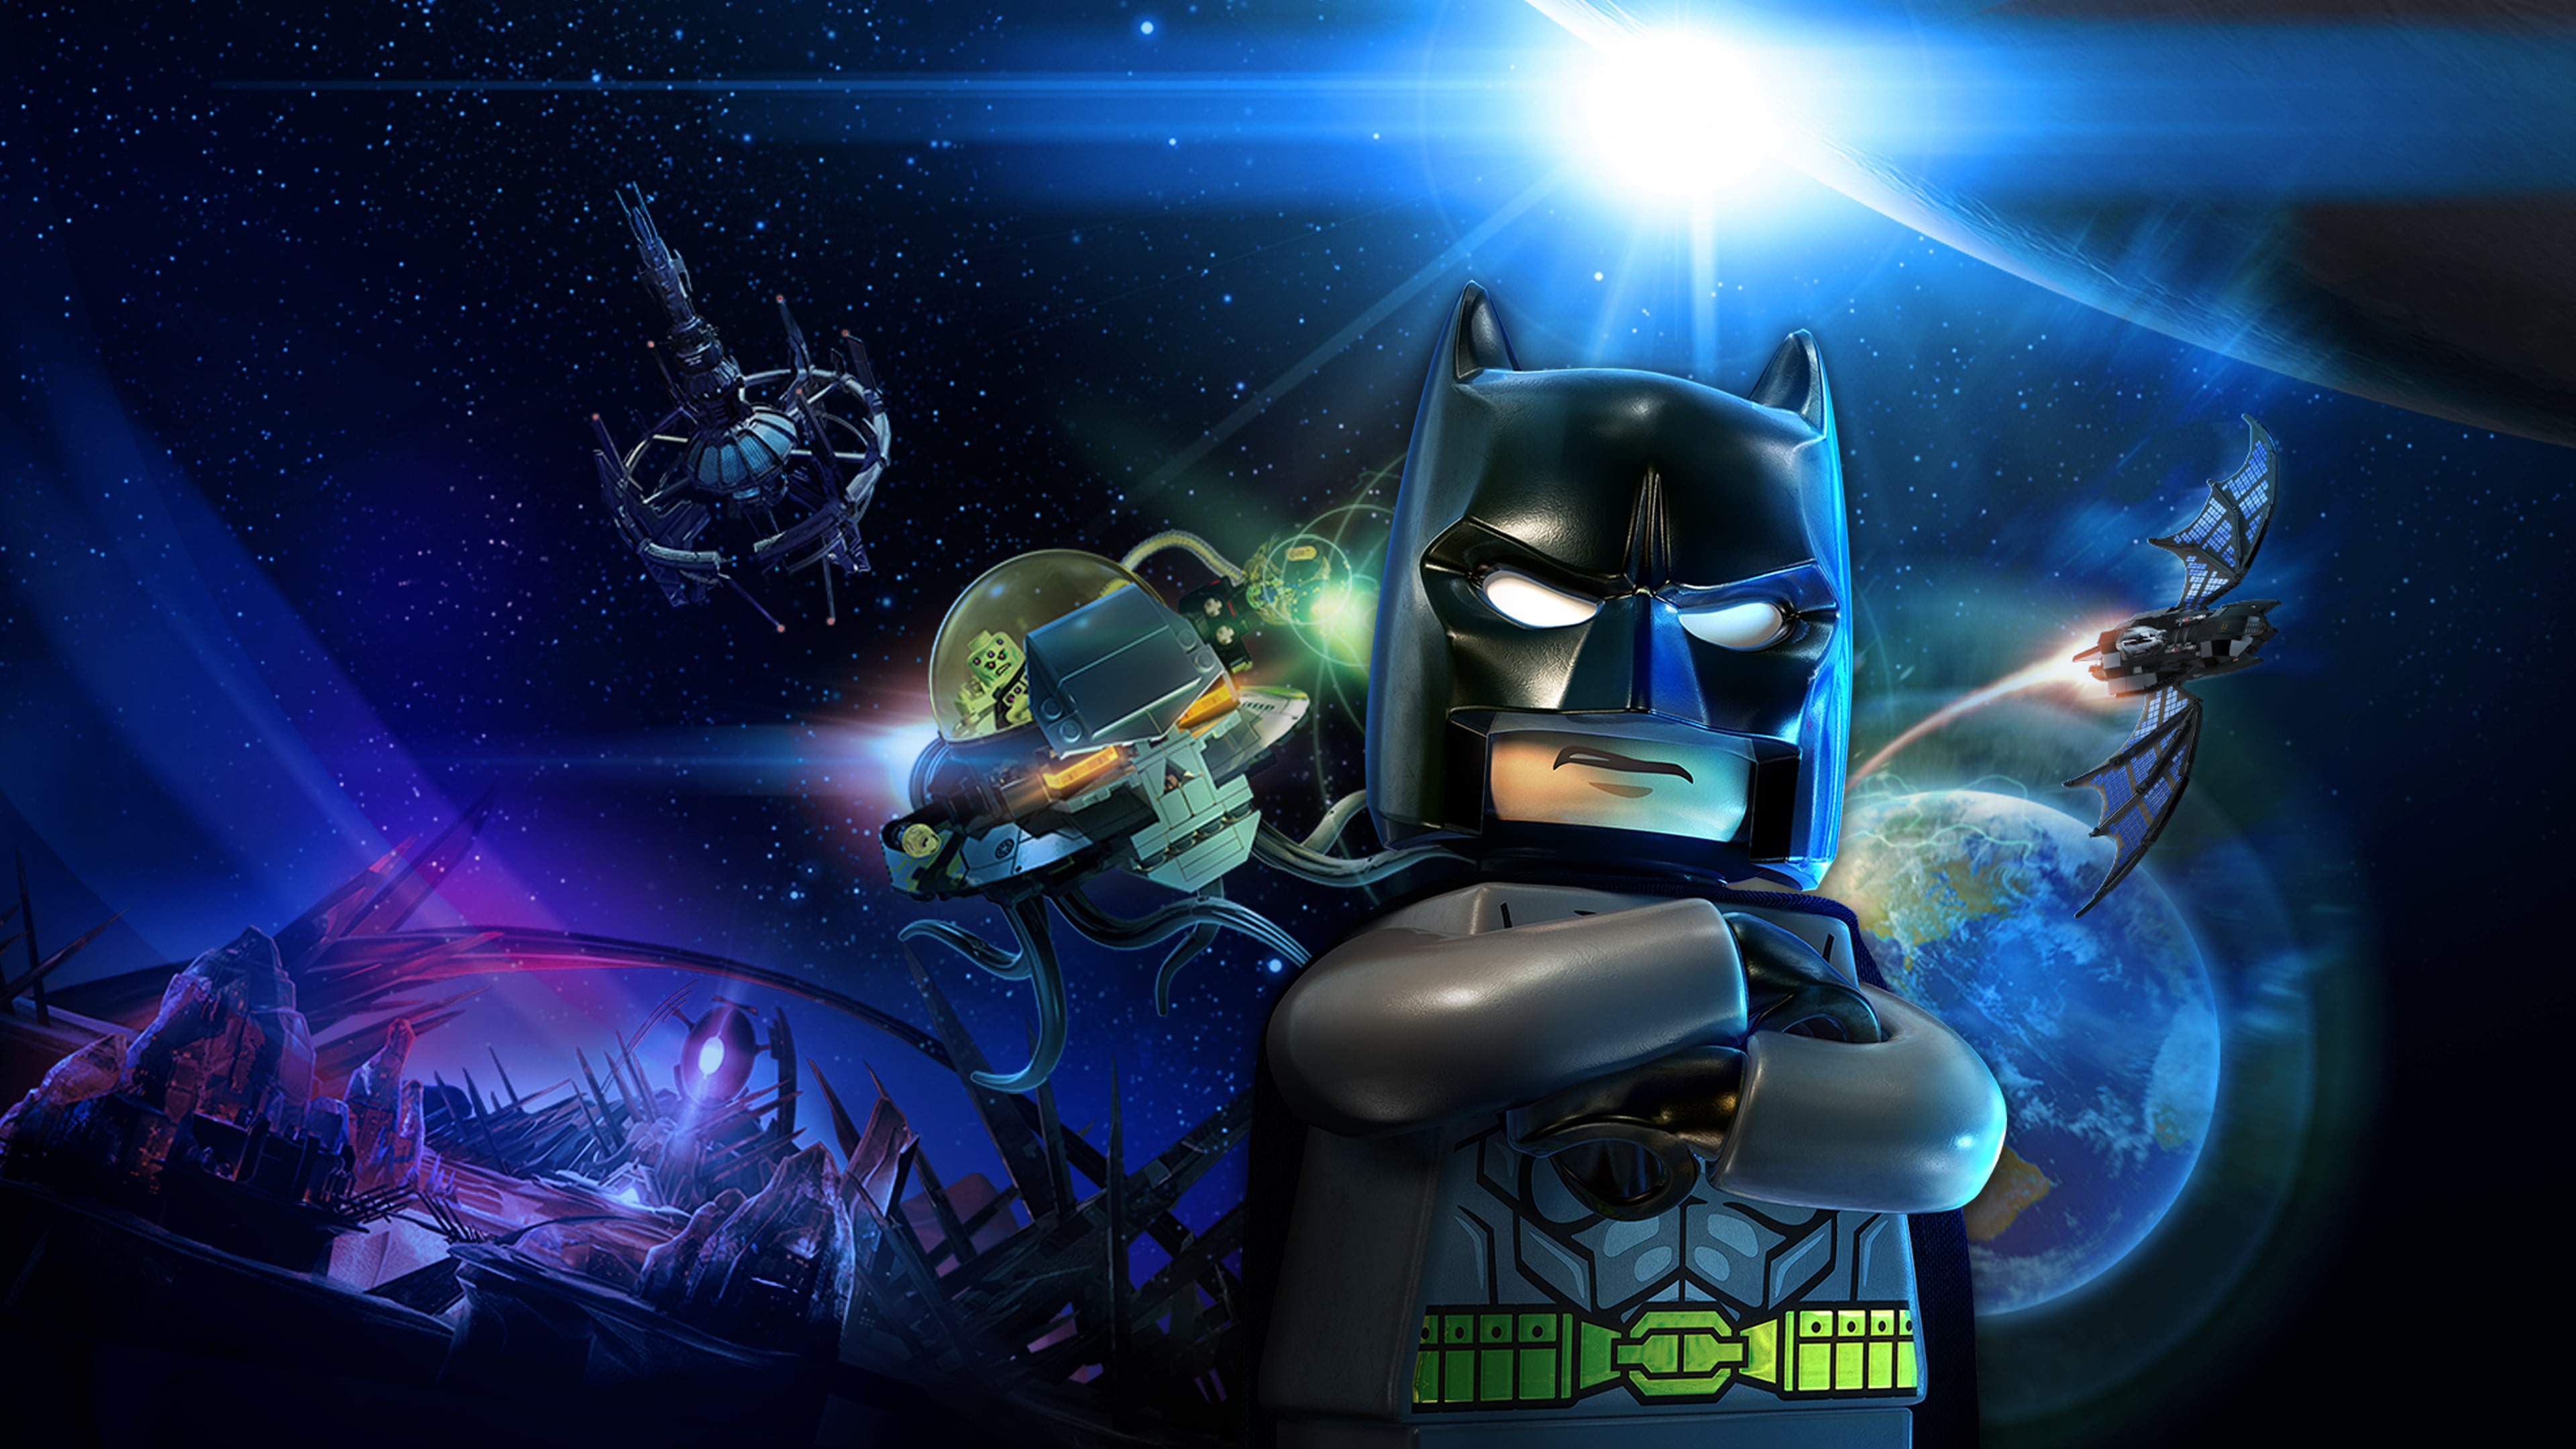 LEGO® Batman™ 3: Beyond Gotham - PlayStation®Hits (English Ver.)